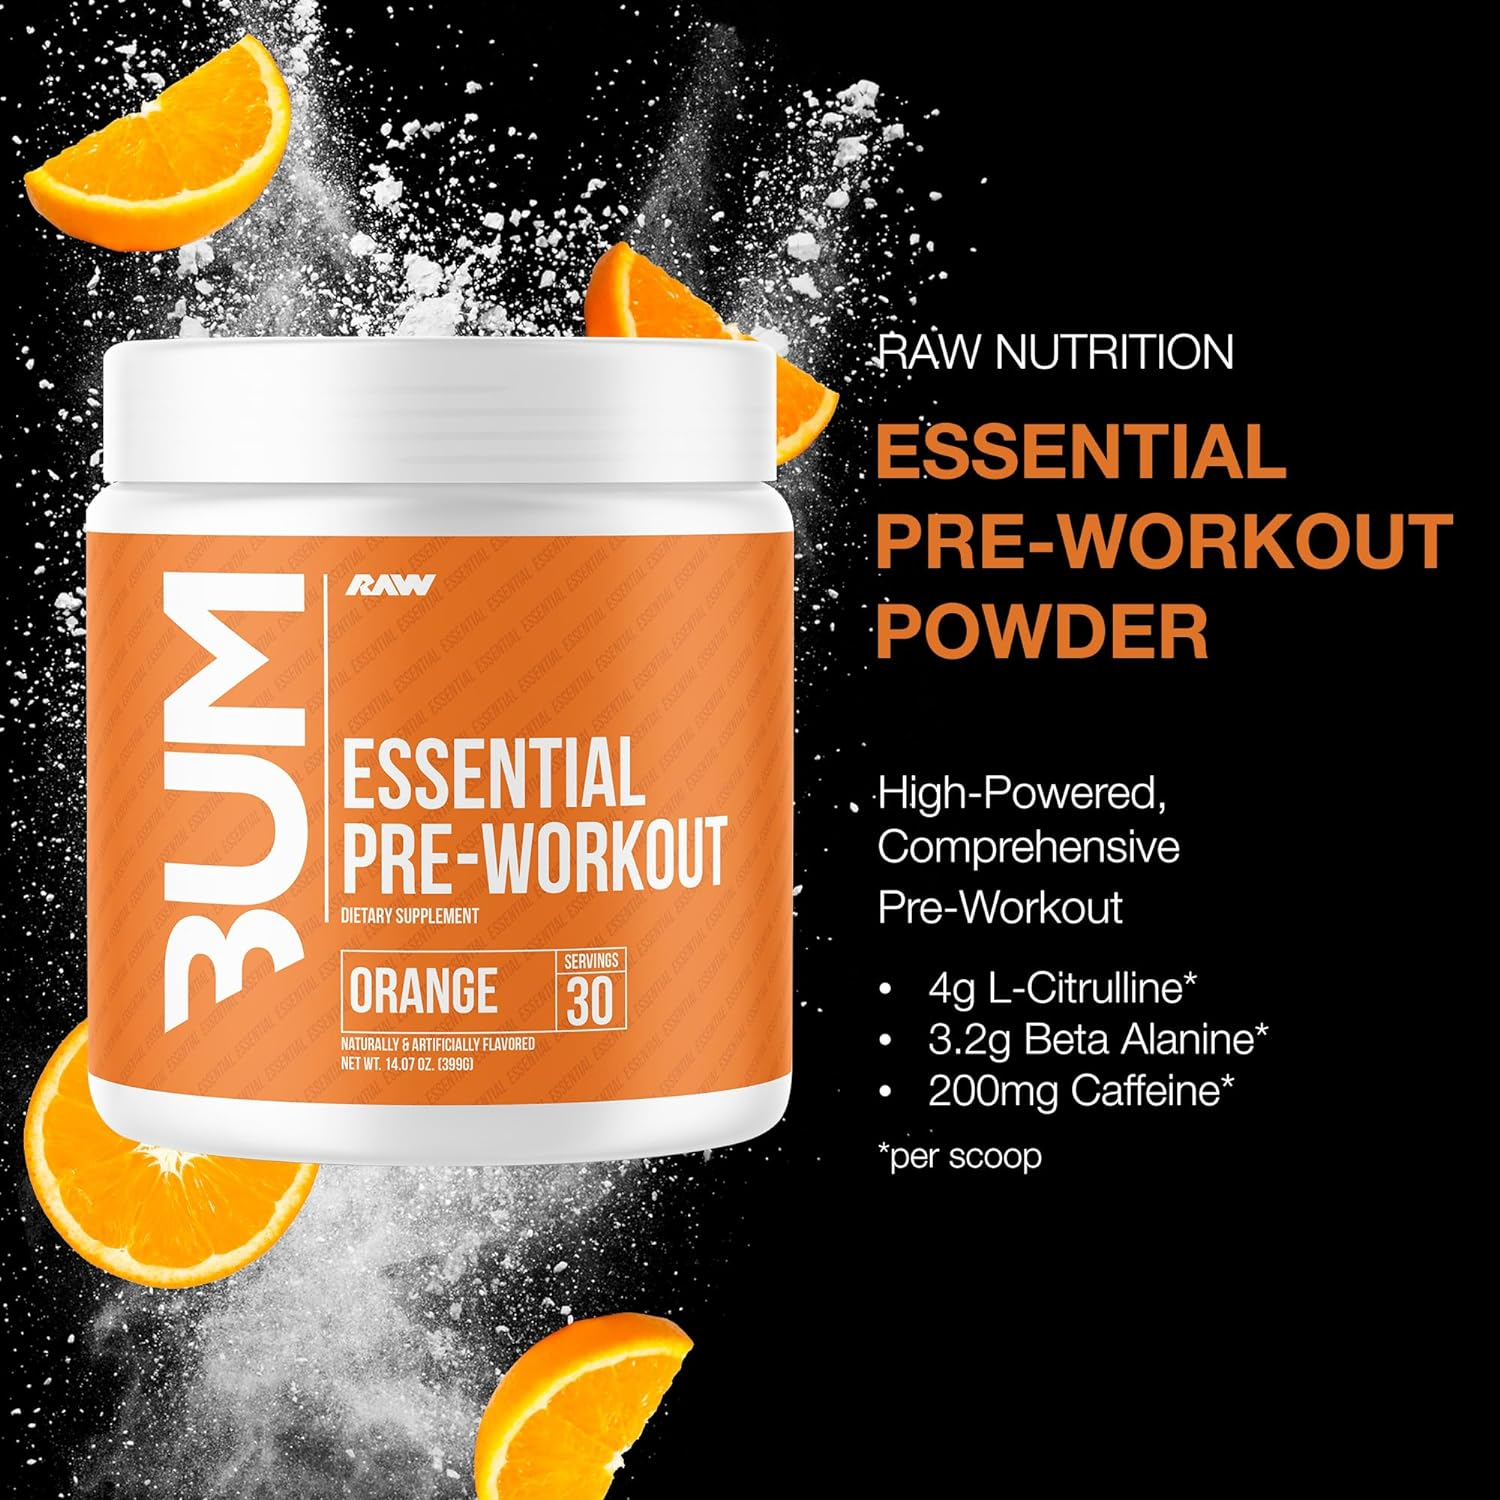 RAW Essential Pre-Workout Powder (Orange) - Chris Bumstead Sports Nutrition Supplement for Men  Women - Preworkout Energy Powder with Caffeine, L-Citrulline, L-Tyrosine,  Beta Alanine Blend